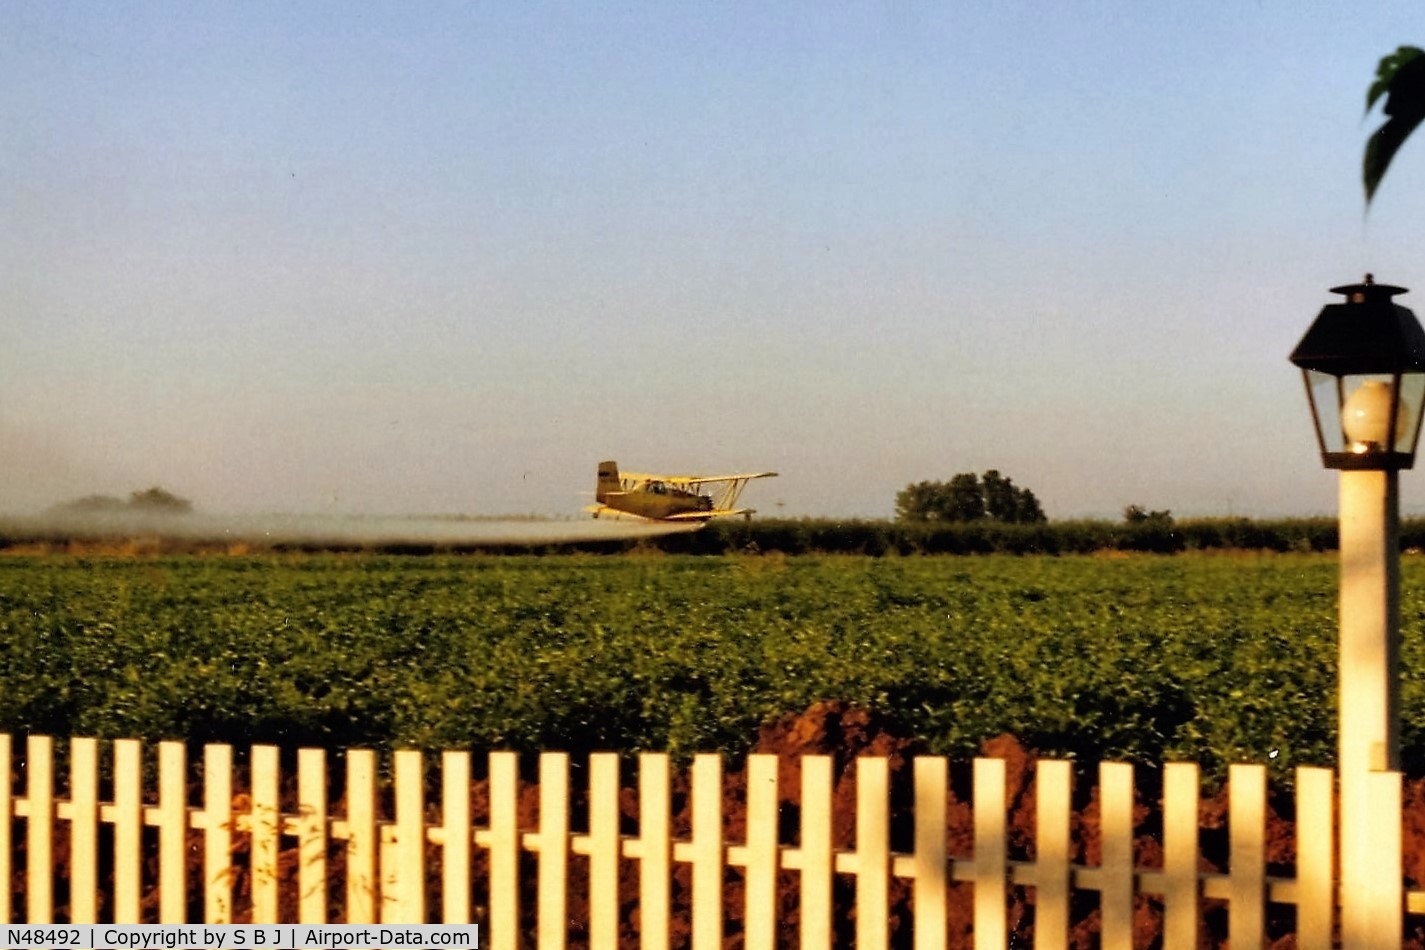 N48492, 1976 Grumman-Schweizer G-164B C/N 47B, 492 spraying tomatos in Patterson, Calif.